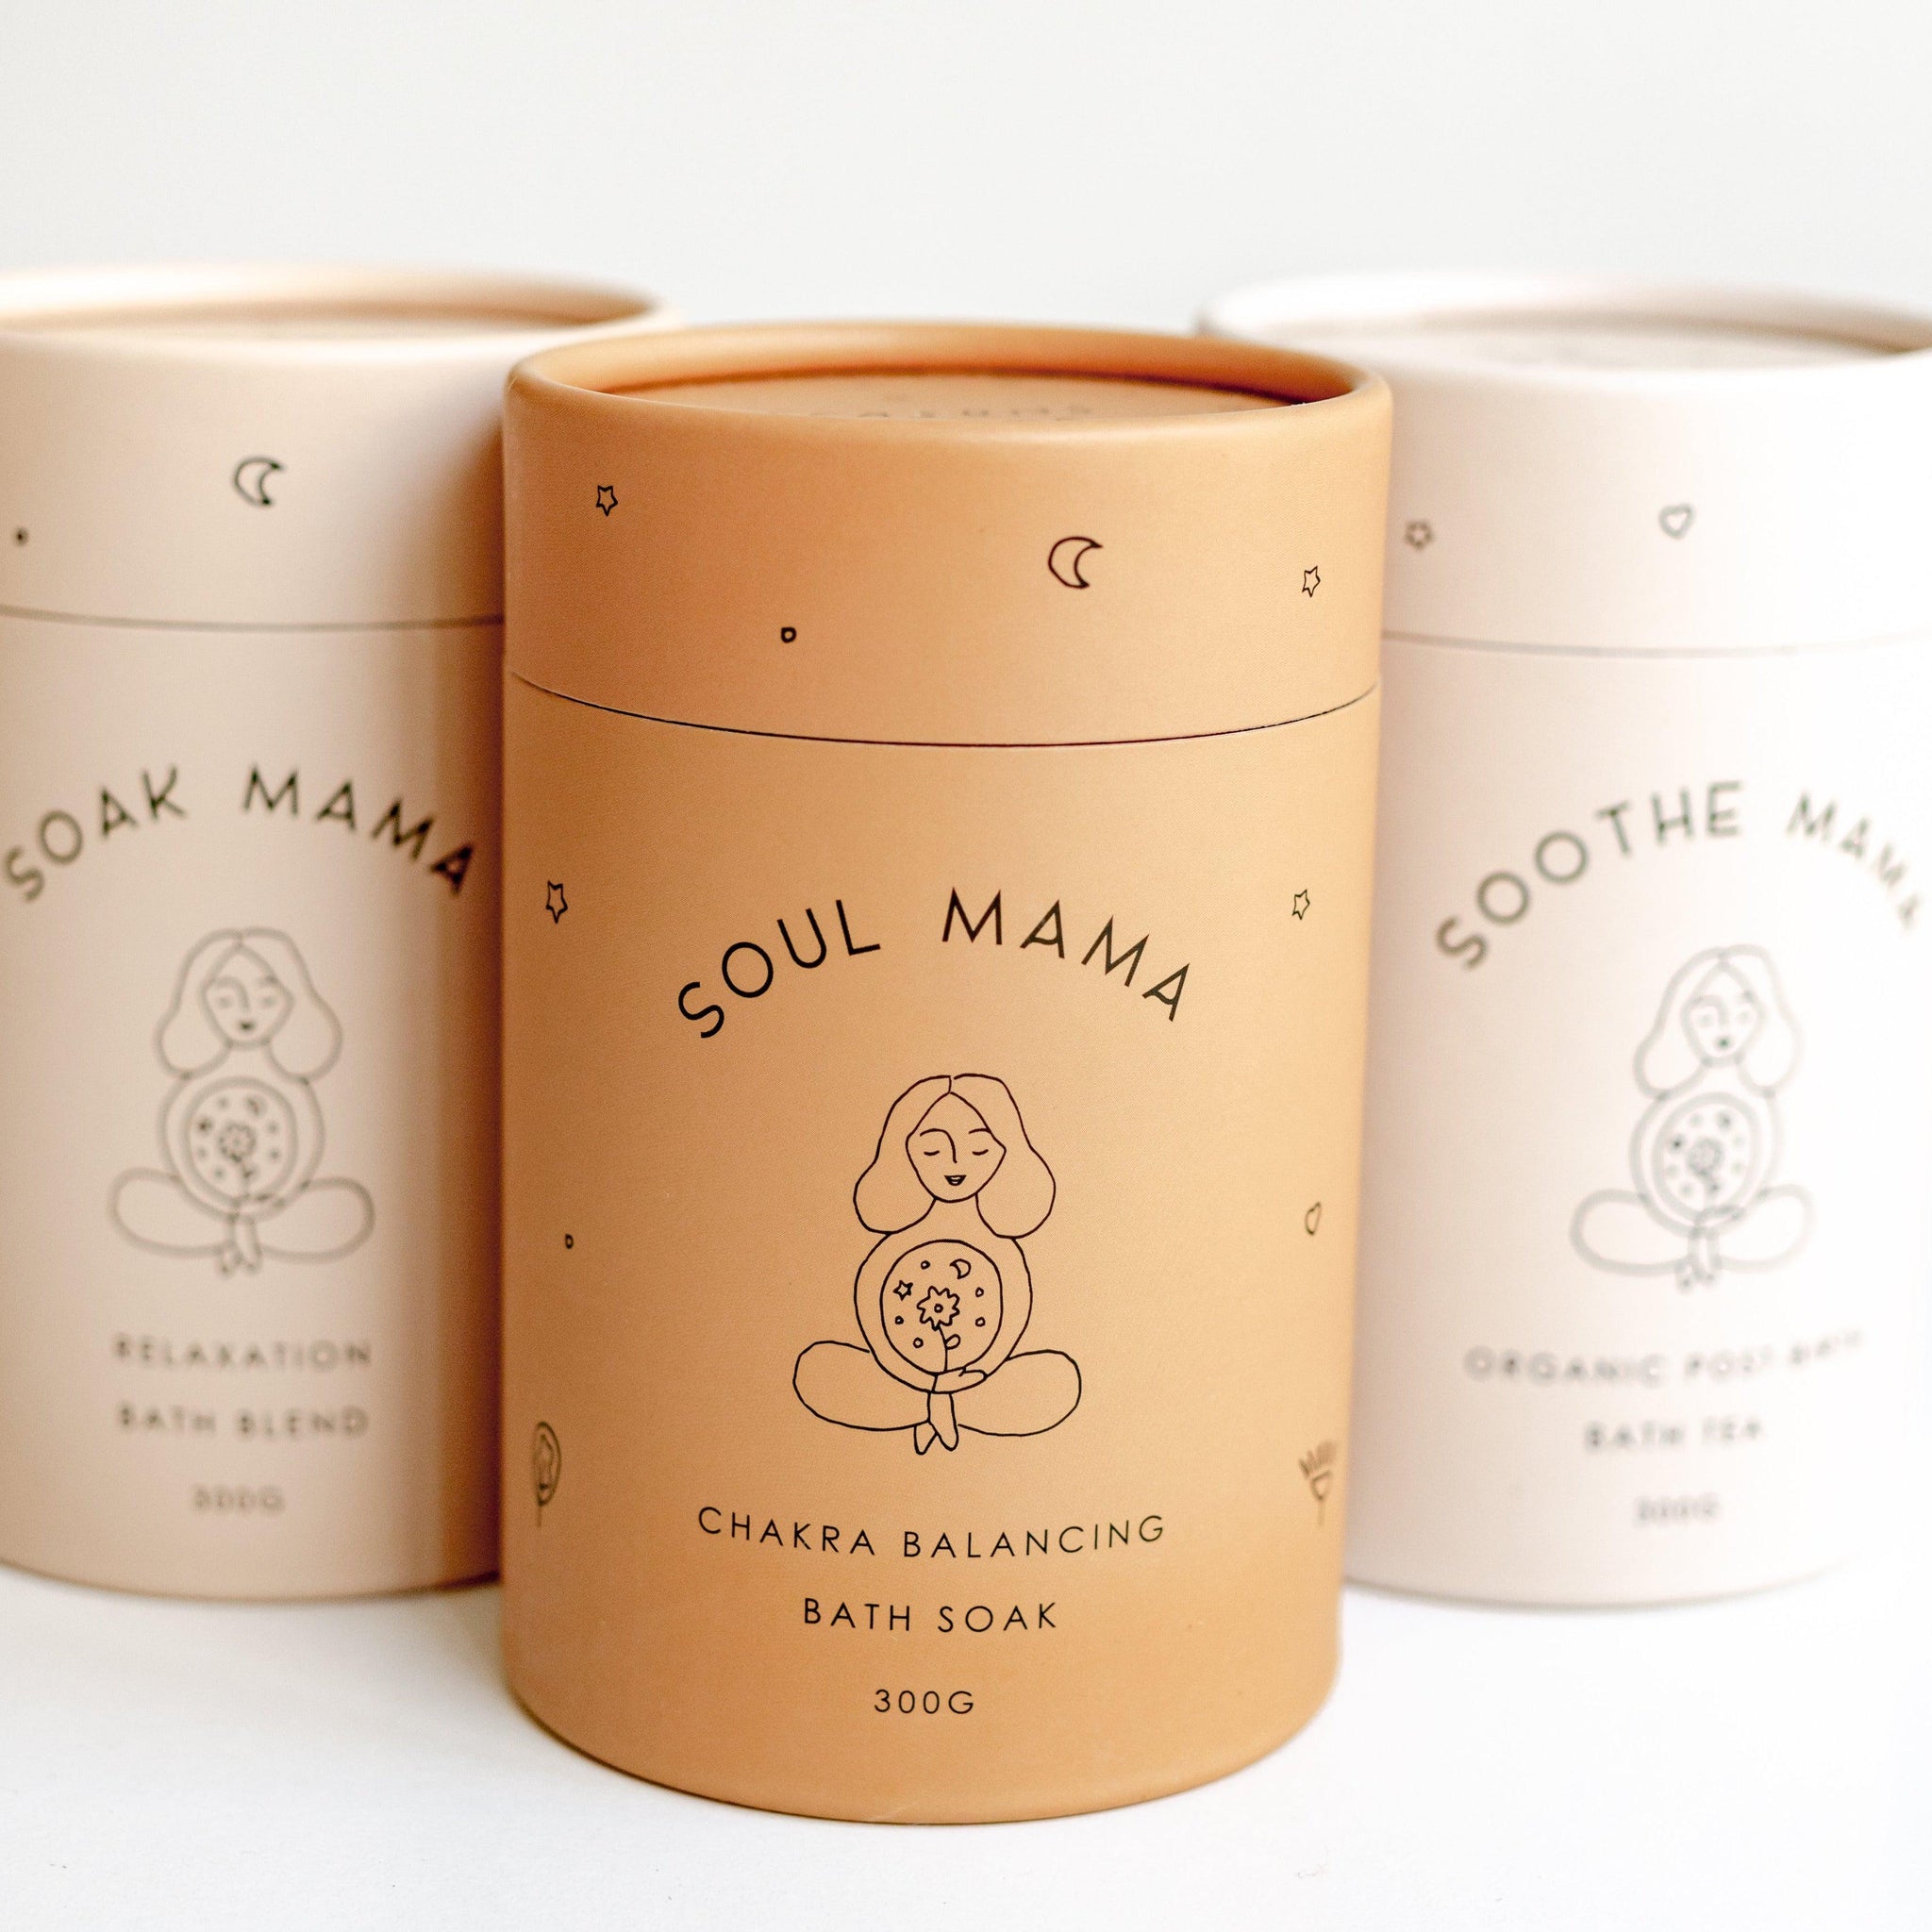 Three tins including Seasons of Mama's Soothe Mama Relaxation Bath Blend, Soul Mama Chakra Balancing Bath Soak and Soothe Mama Organic Post-Birth Bath Tea.